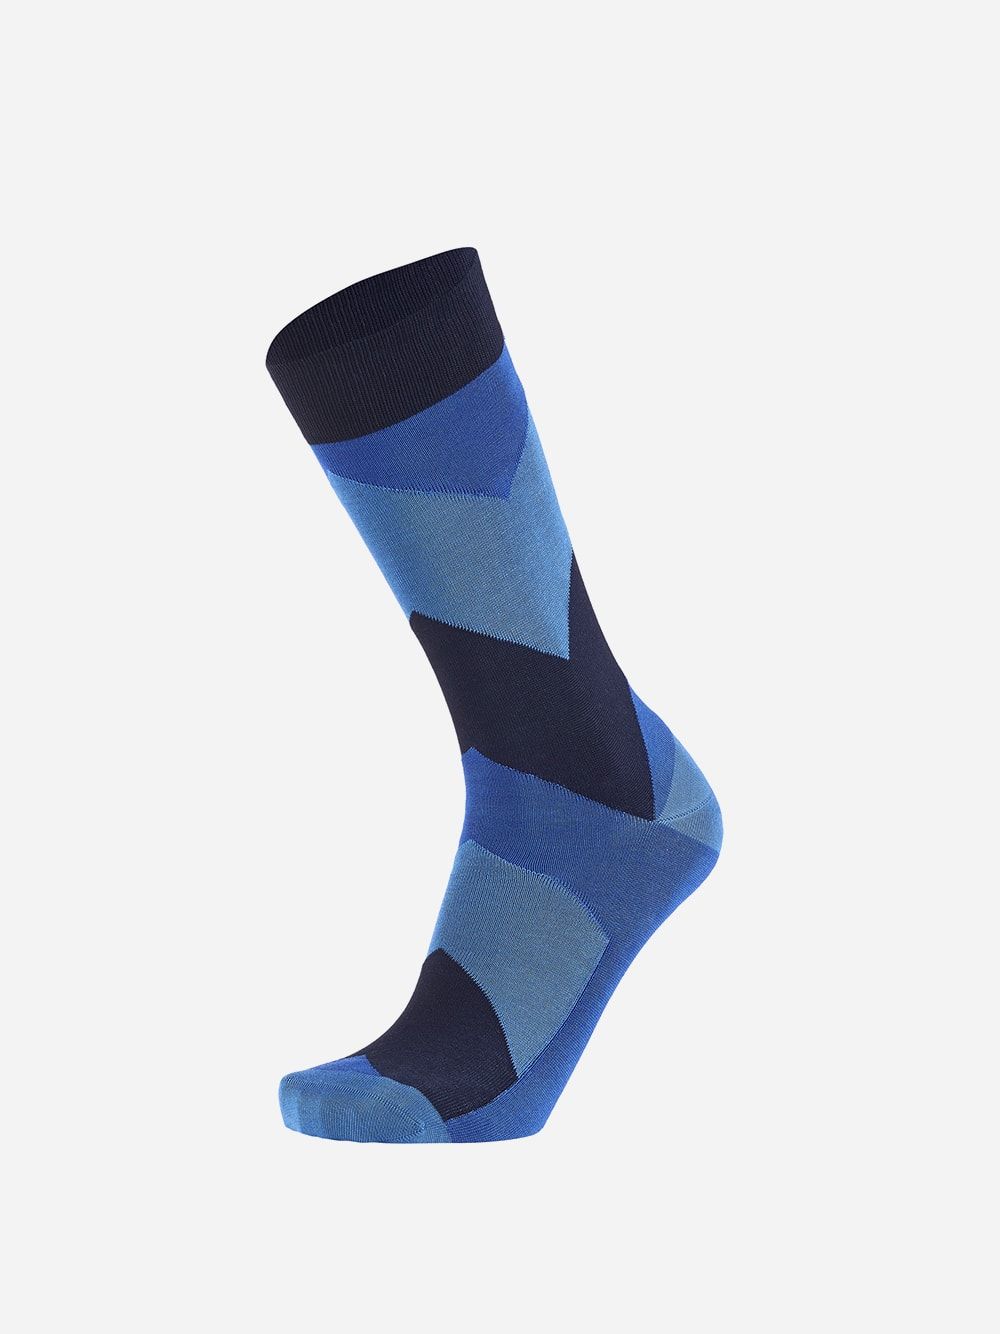 Blue Socks Arrows | Westmister